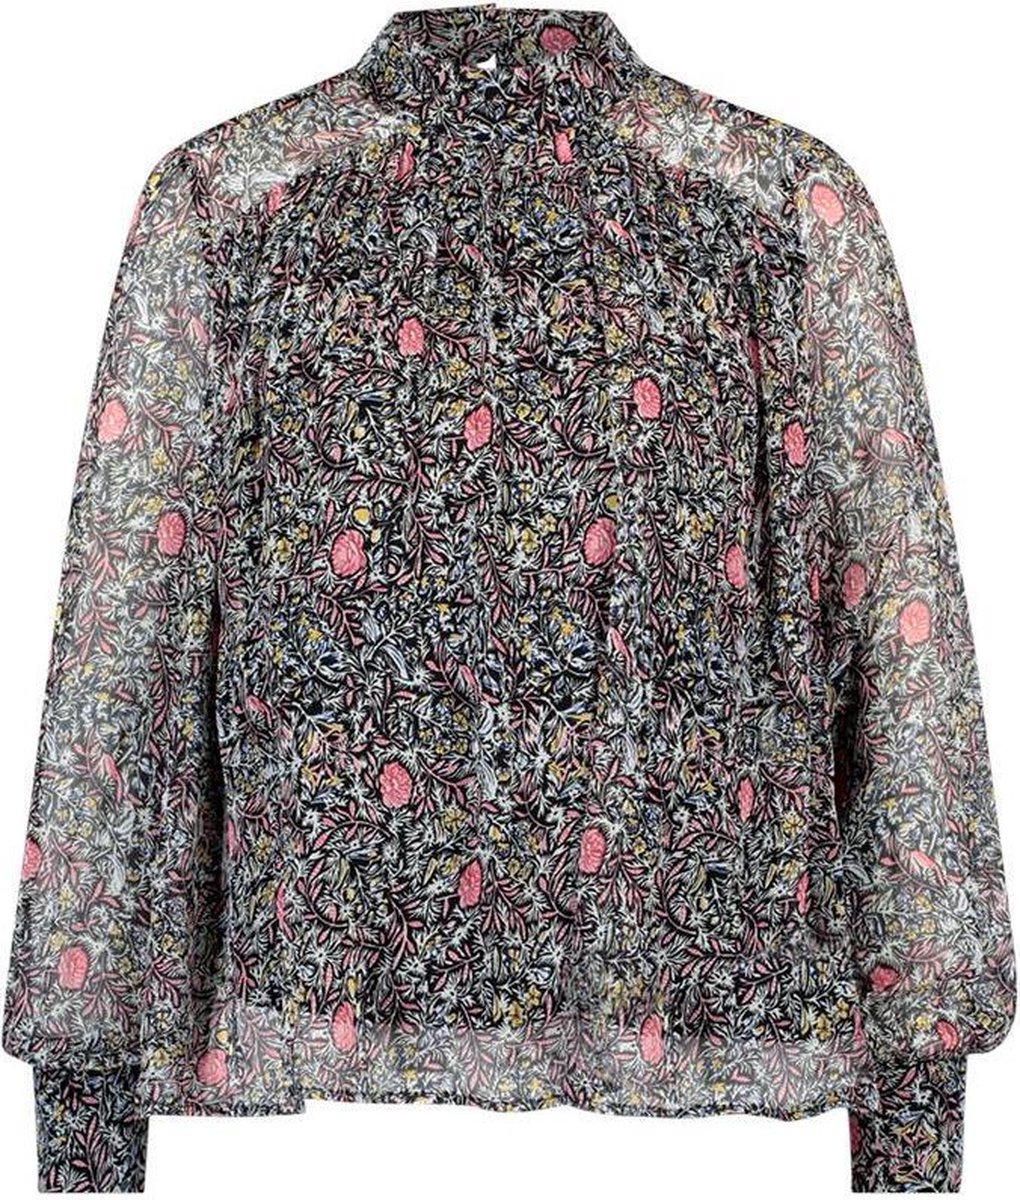 Aaiko transparante tuniek blouse met top eronder - Maat S